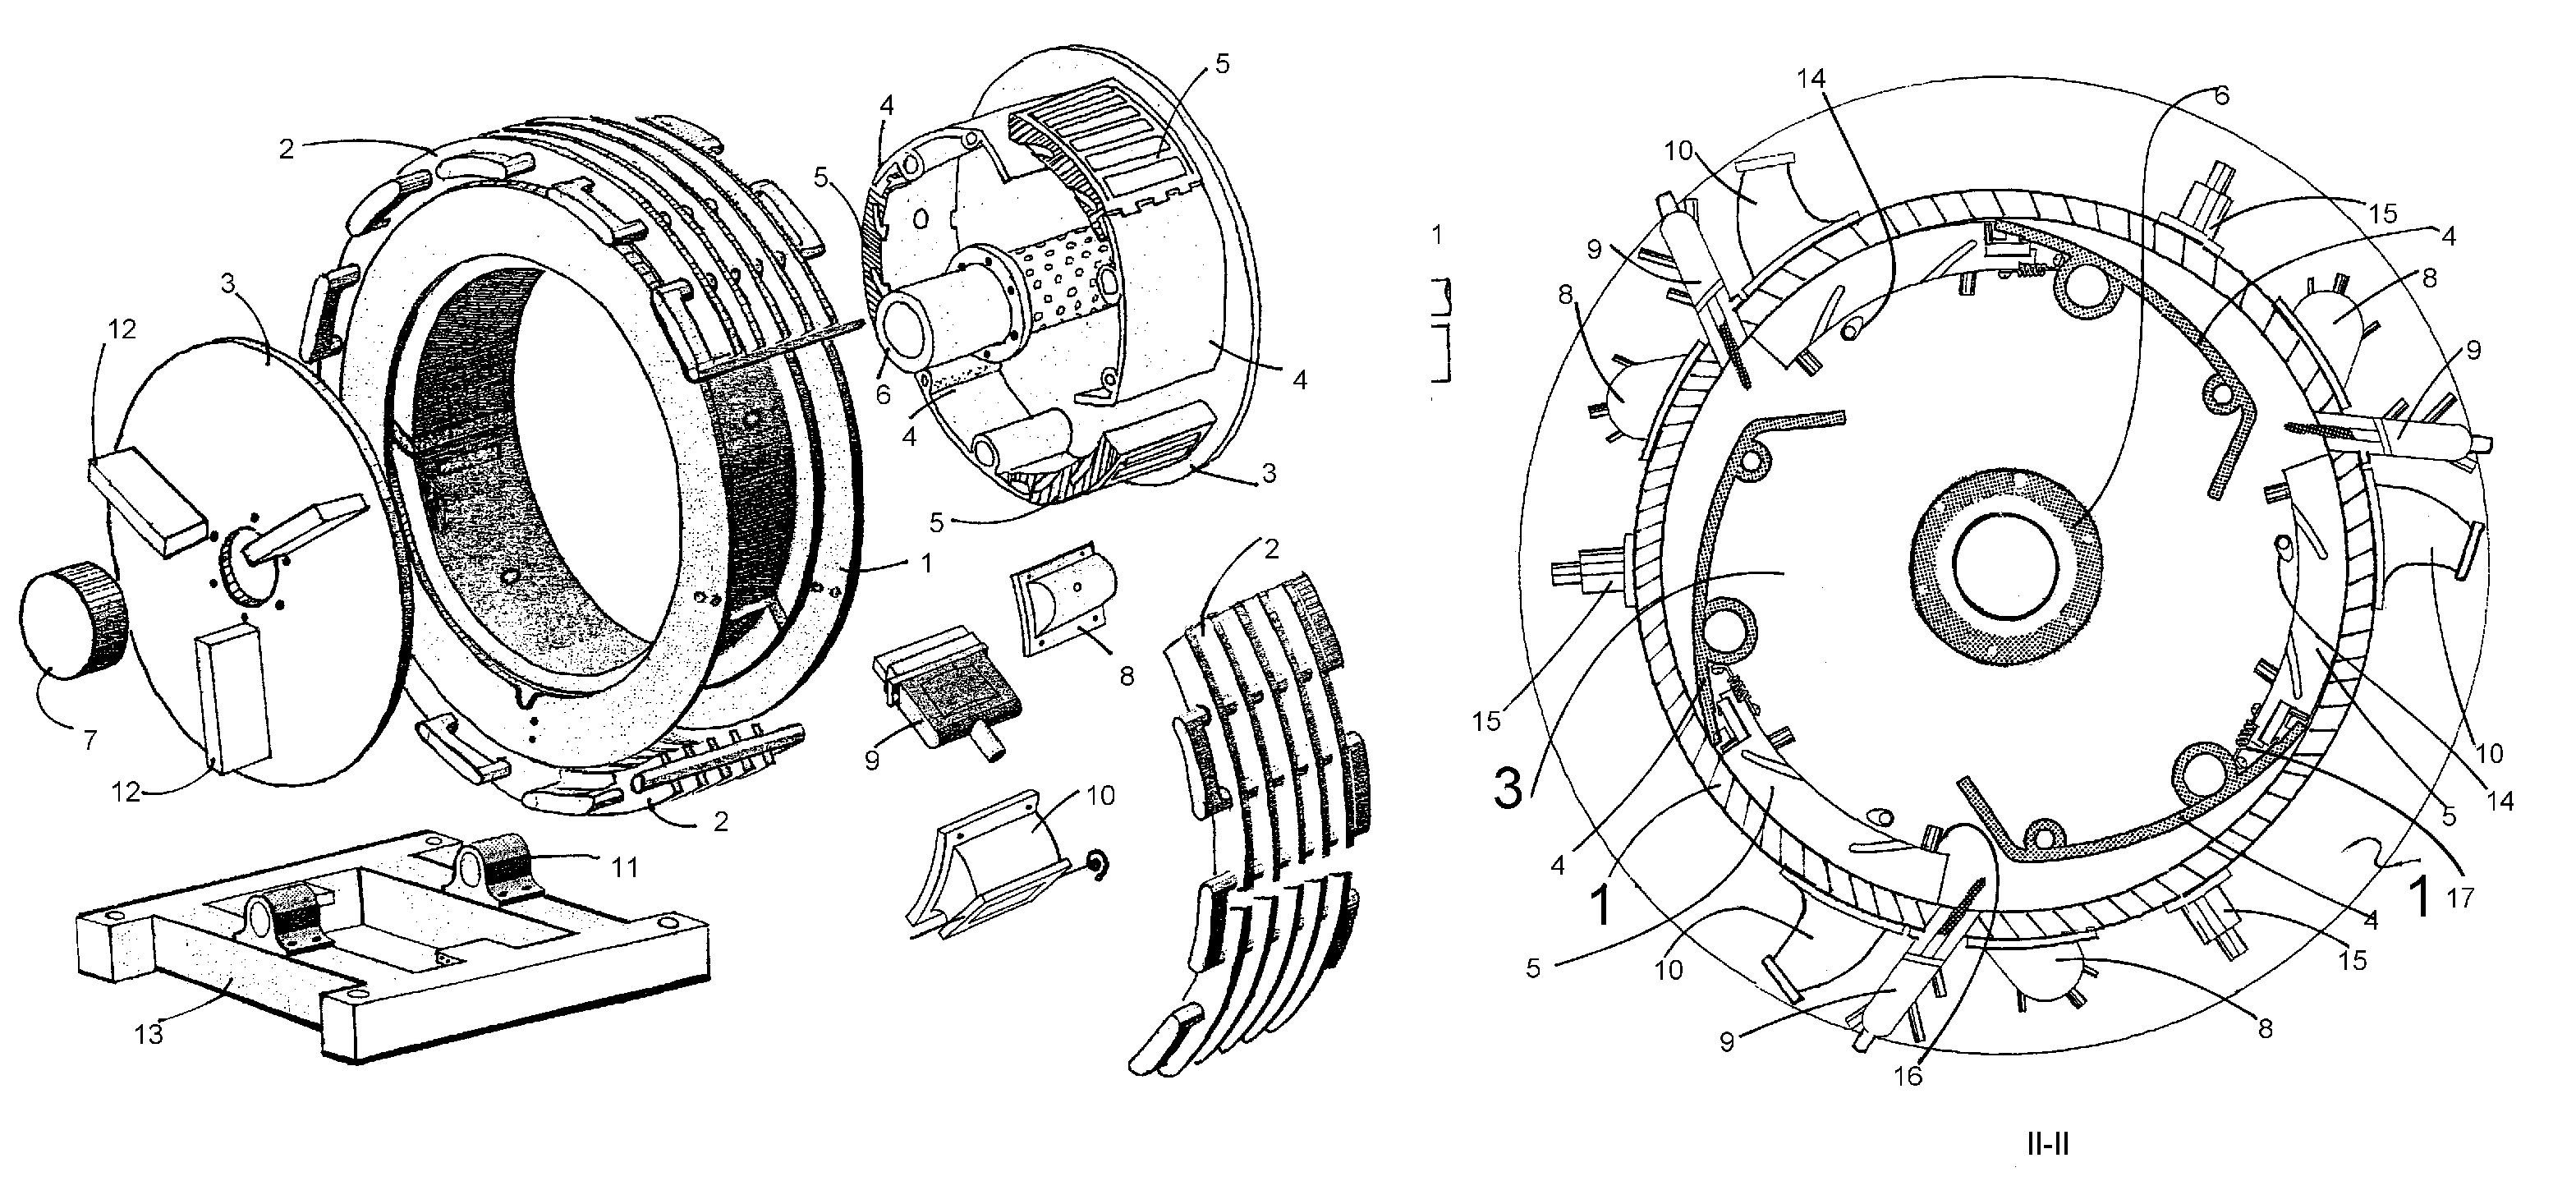 Modular rotary engine